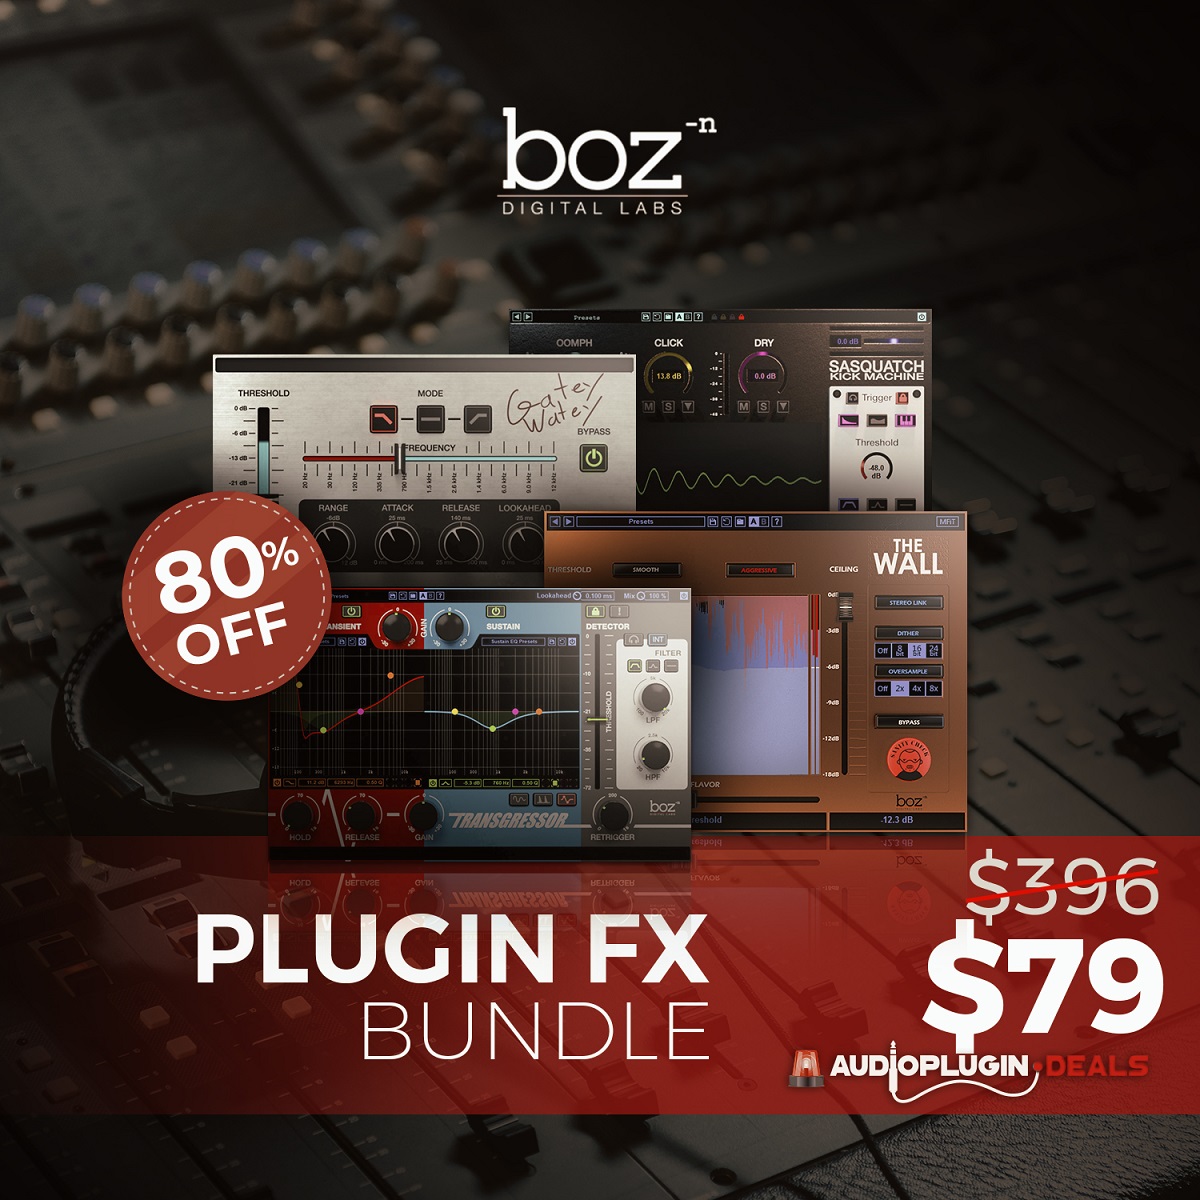 Get (80% OFF) Plugin FX Bundle by BOZ Digital Labs